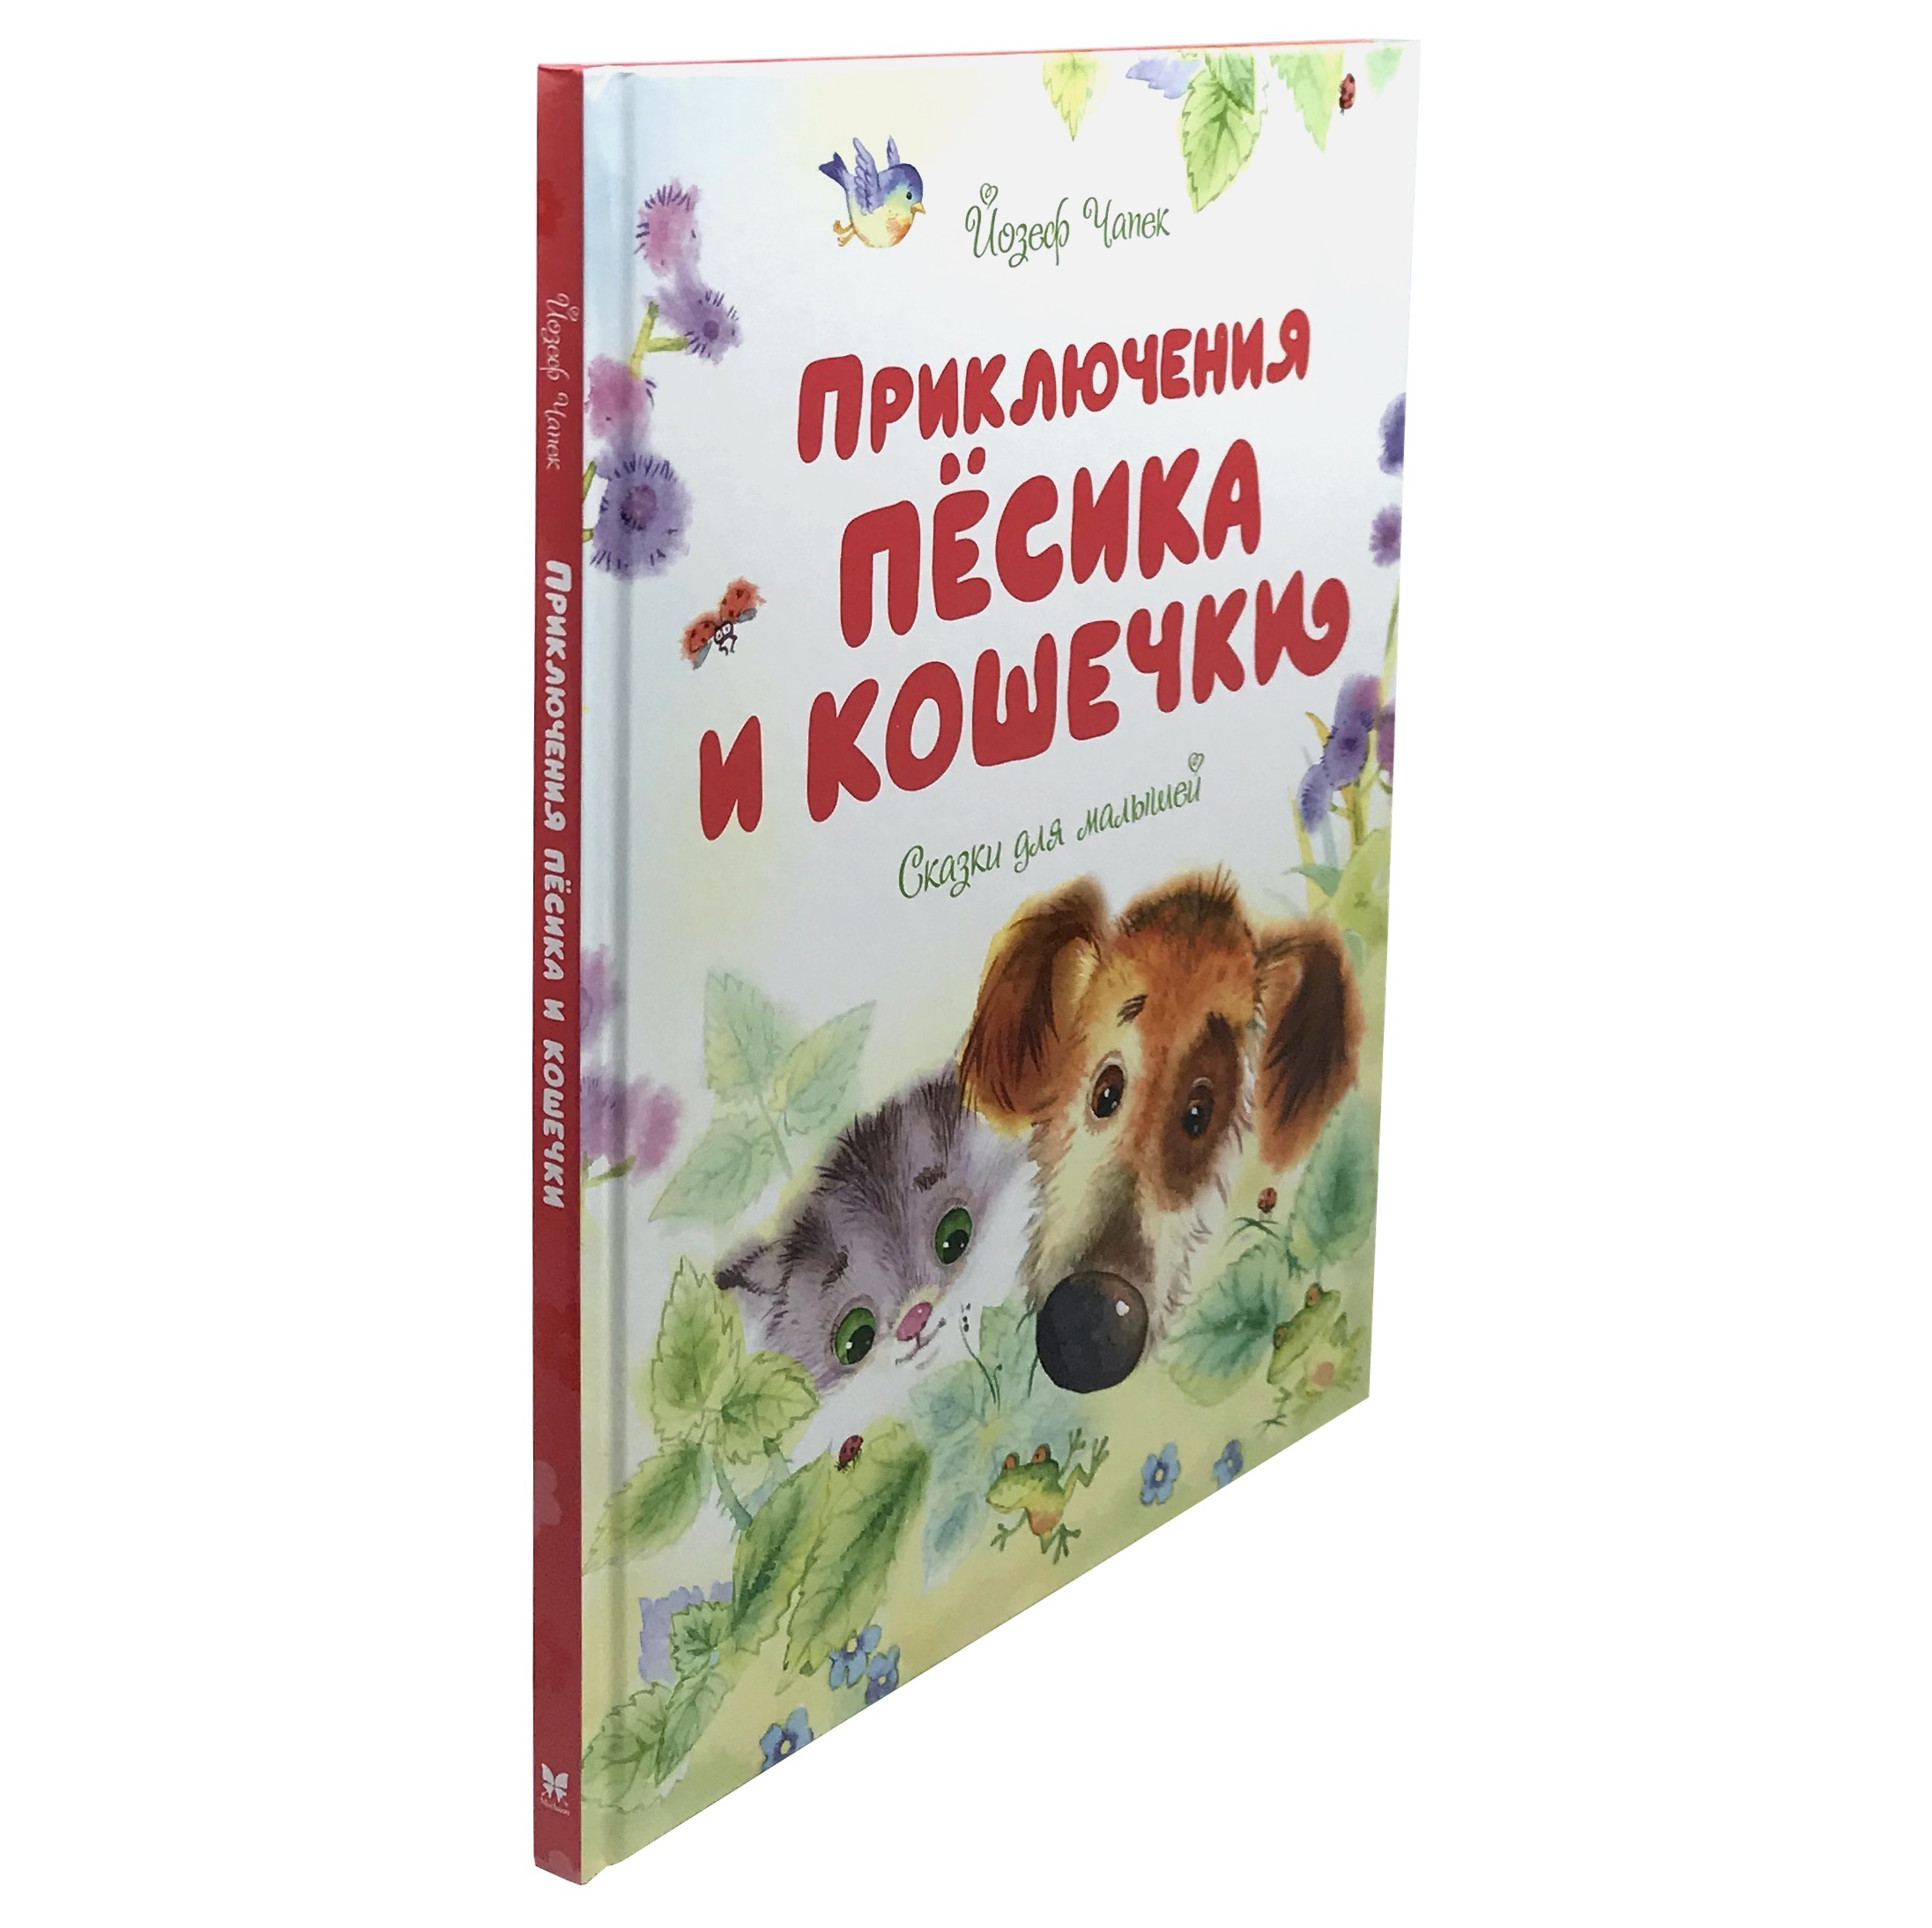 Приключения Пёсика и Кошечки. Автор — Йозеф Чапек. 